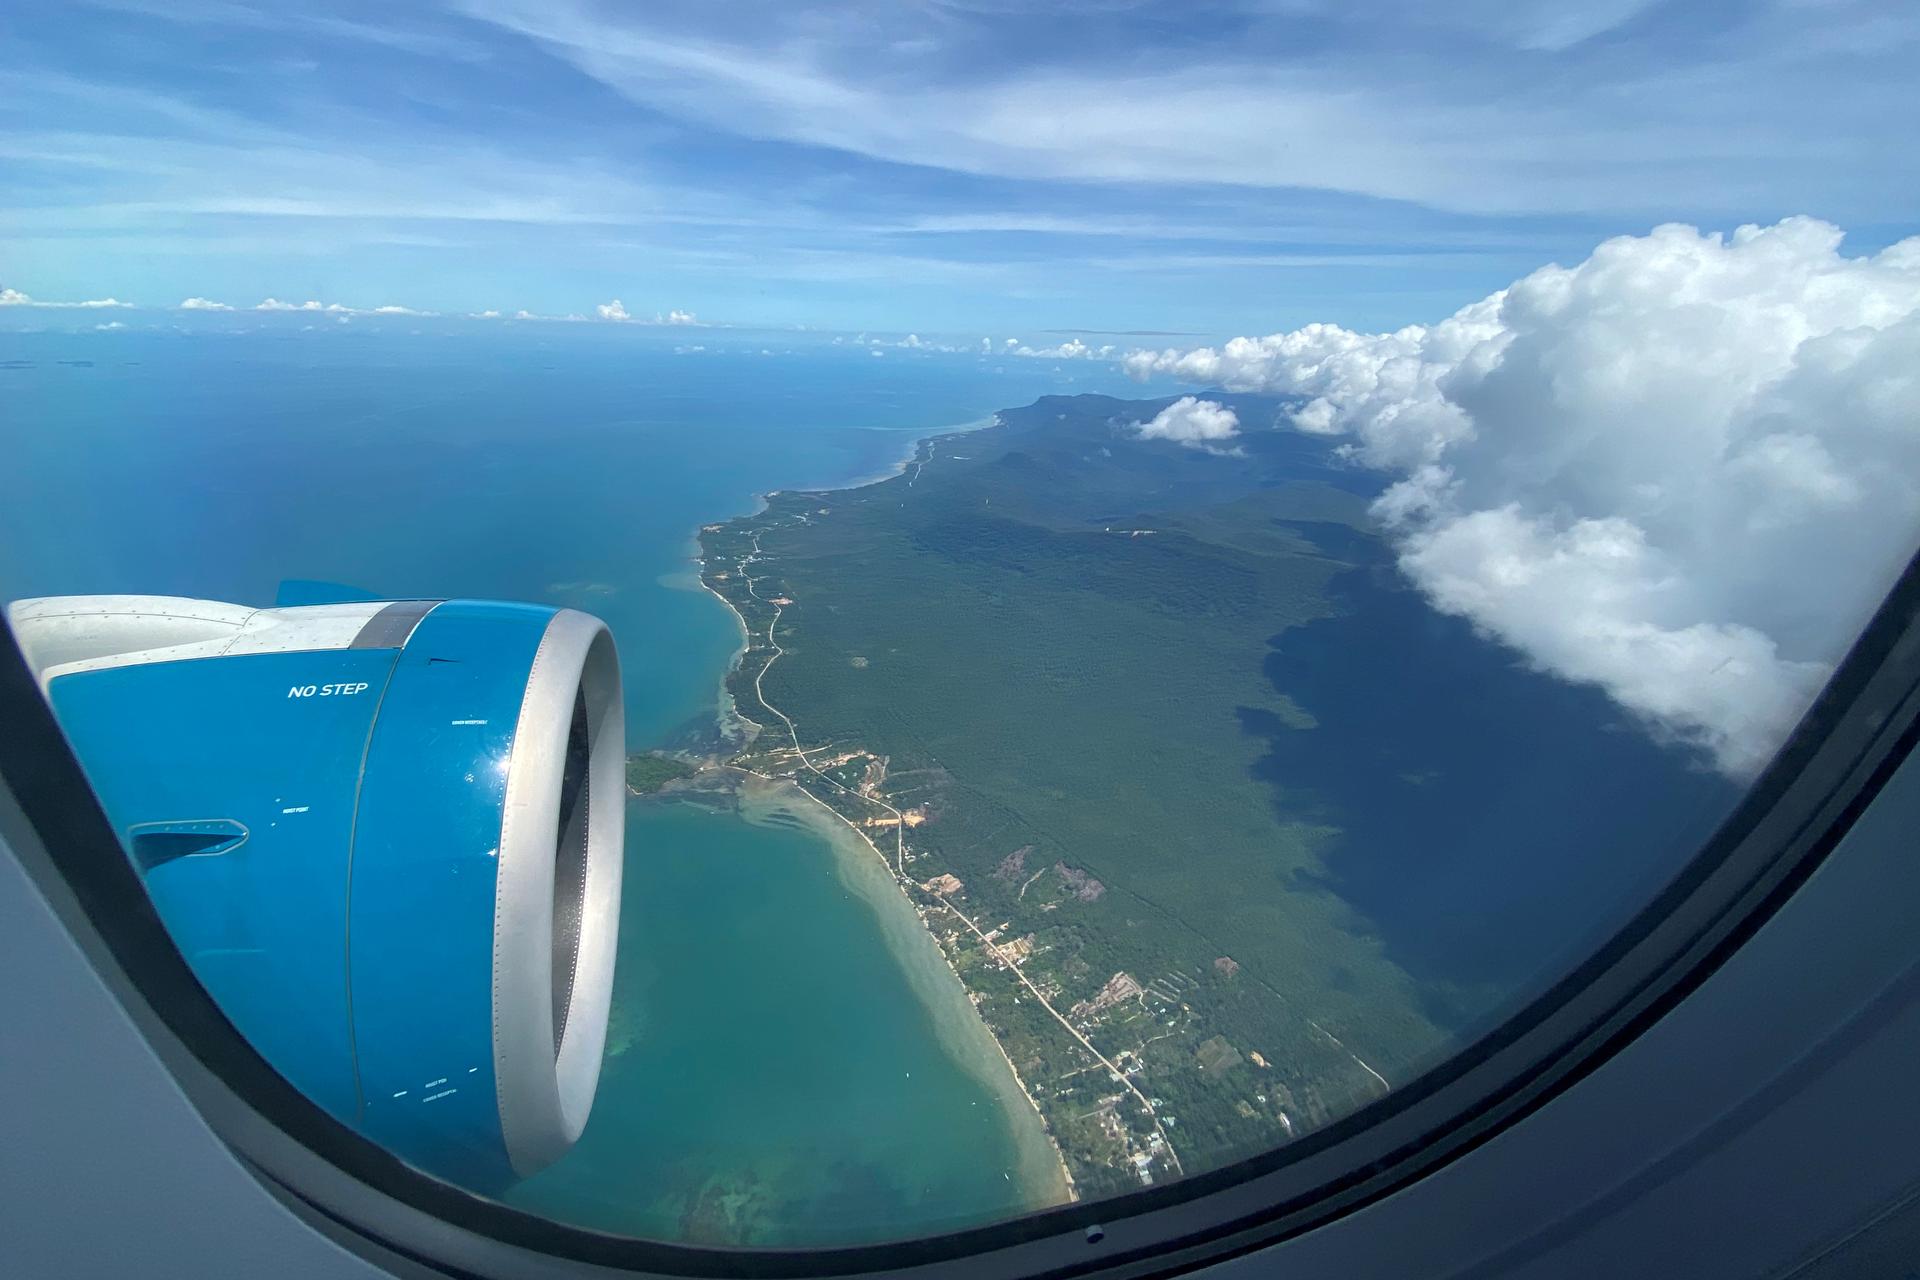 Traveling to Phu Yen by plane